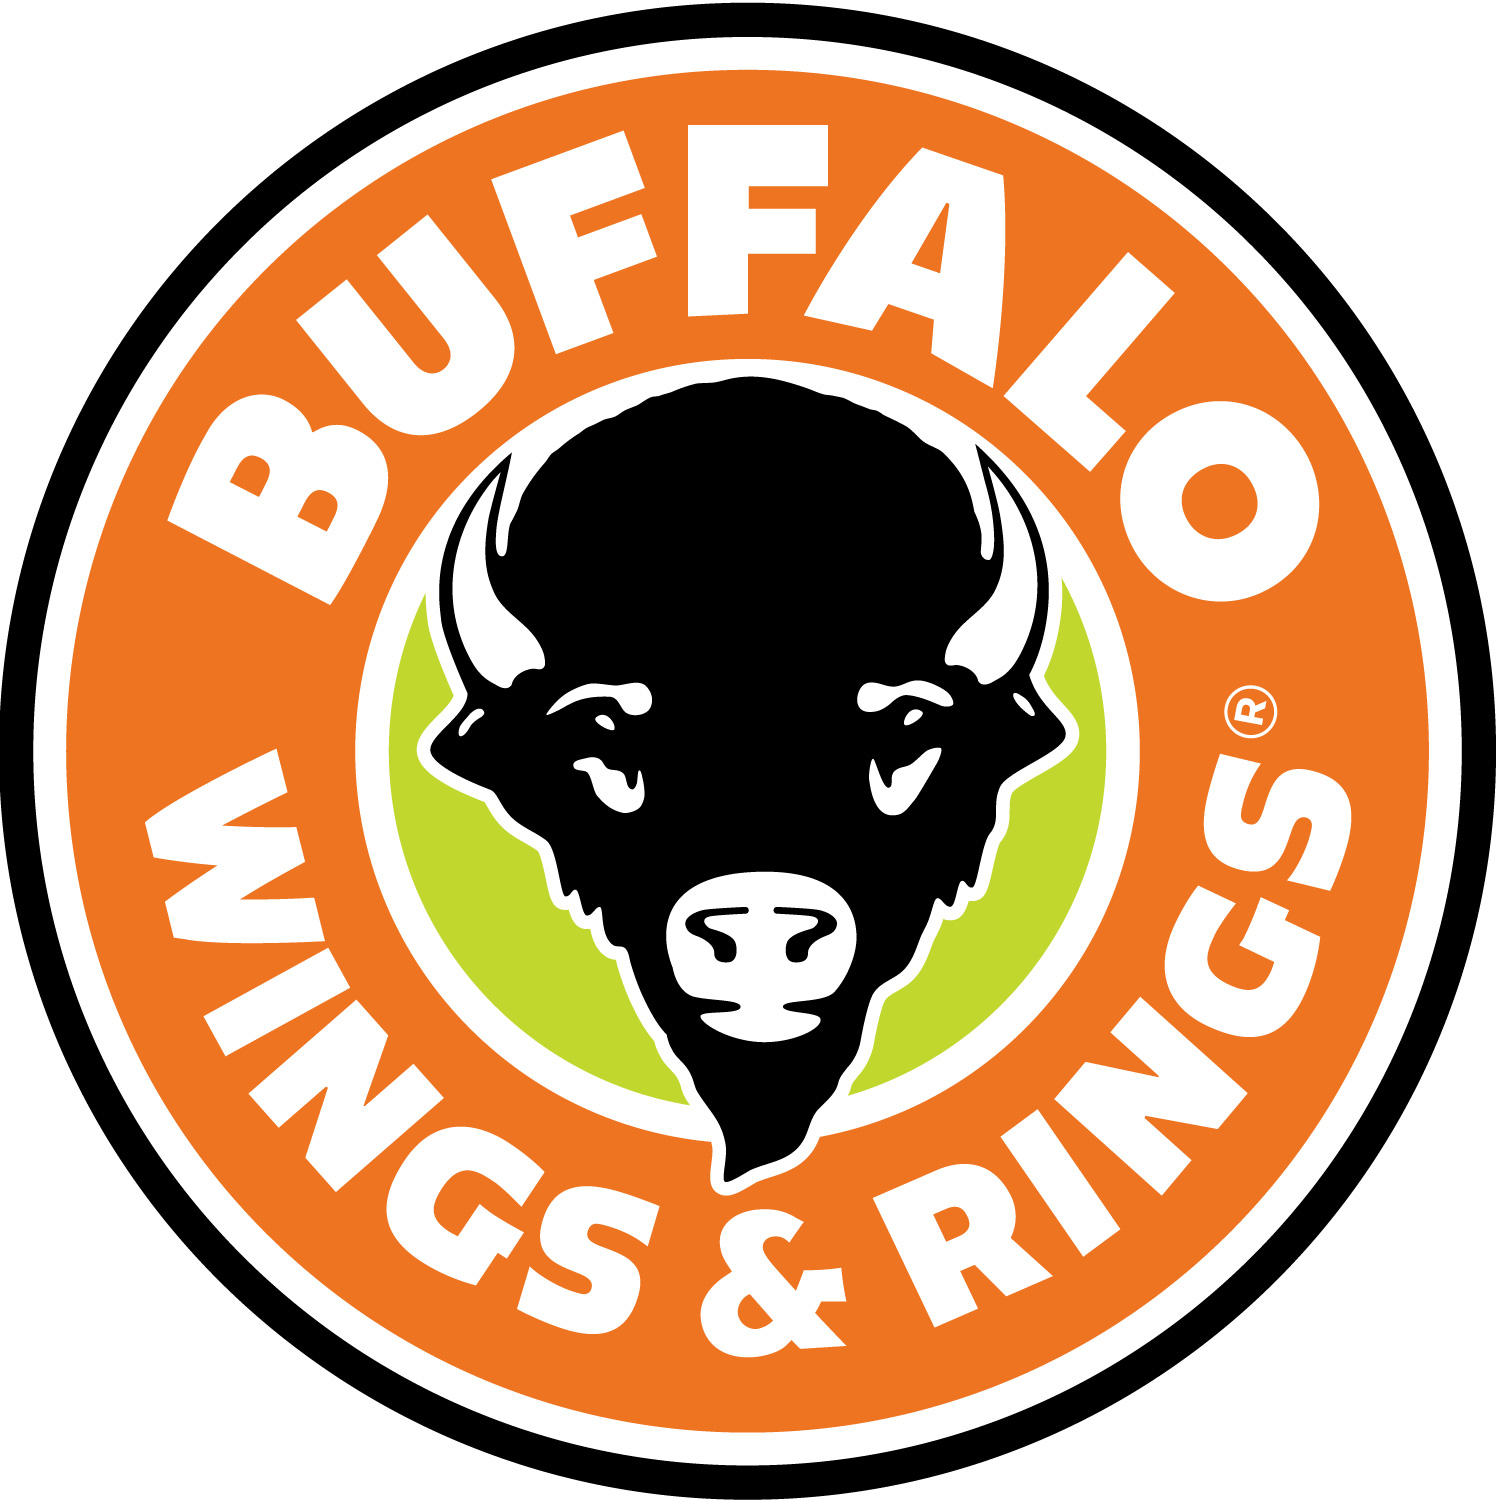 Buffalo wings and rings